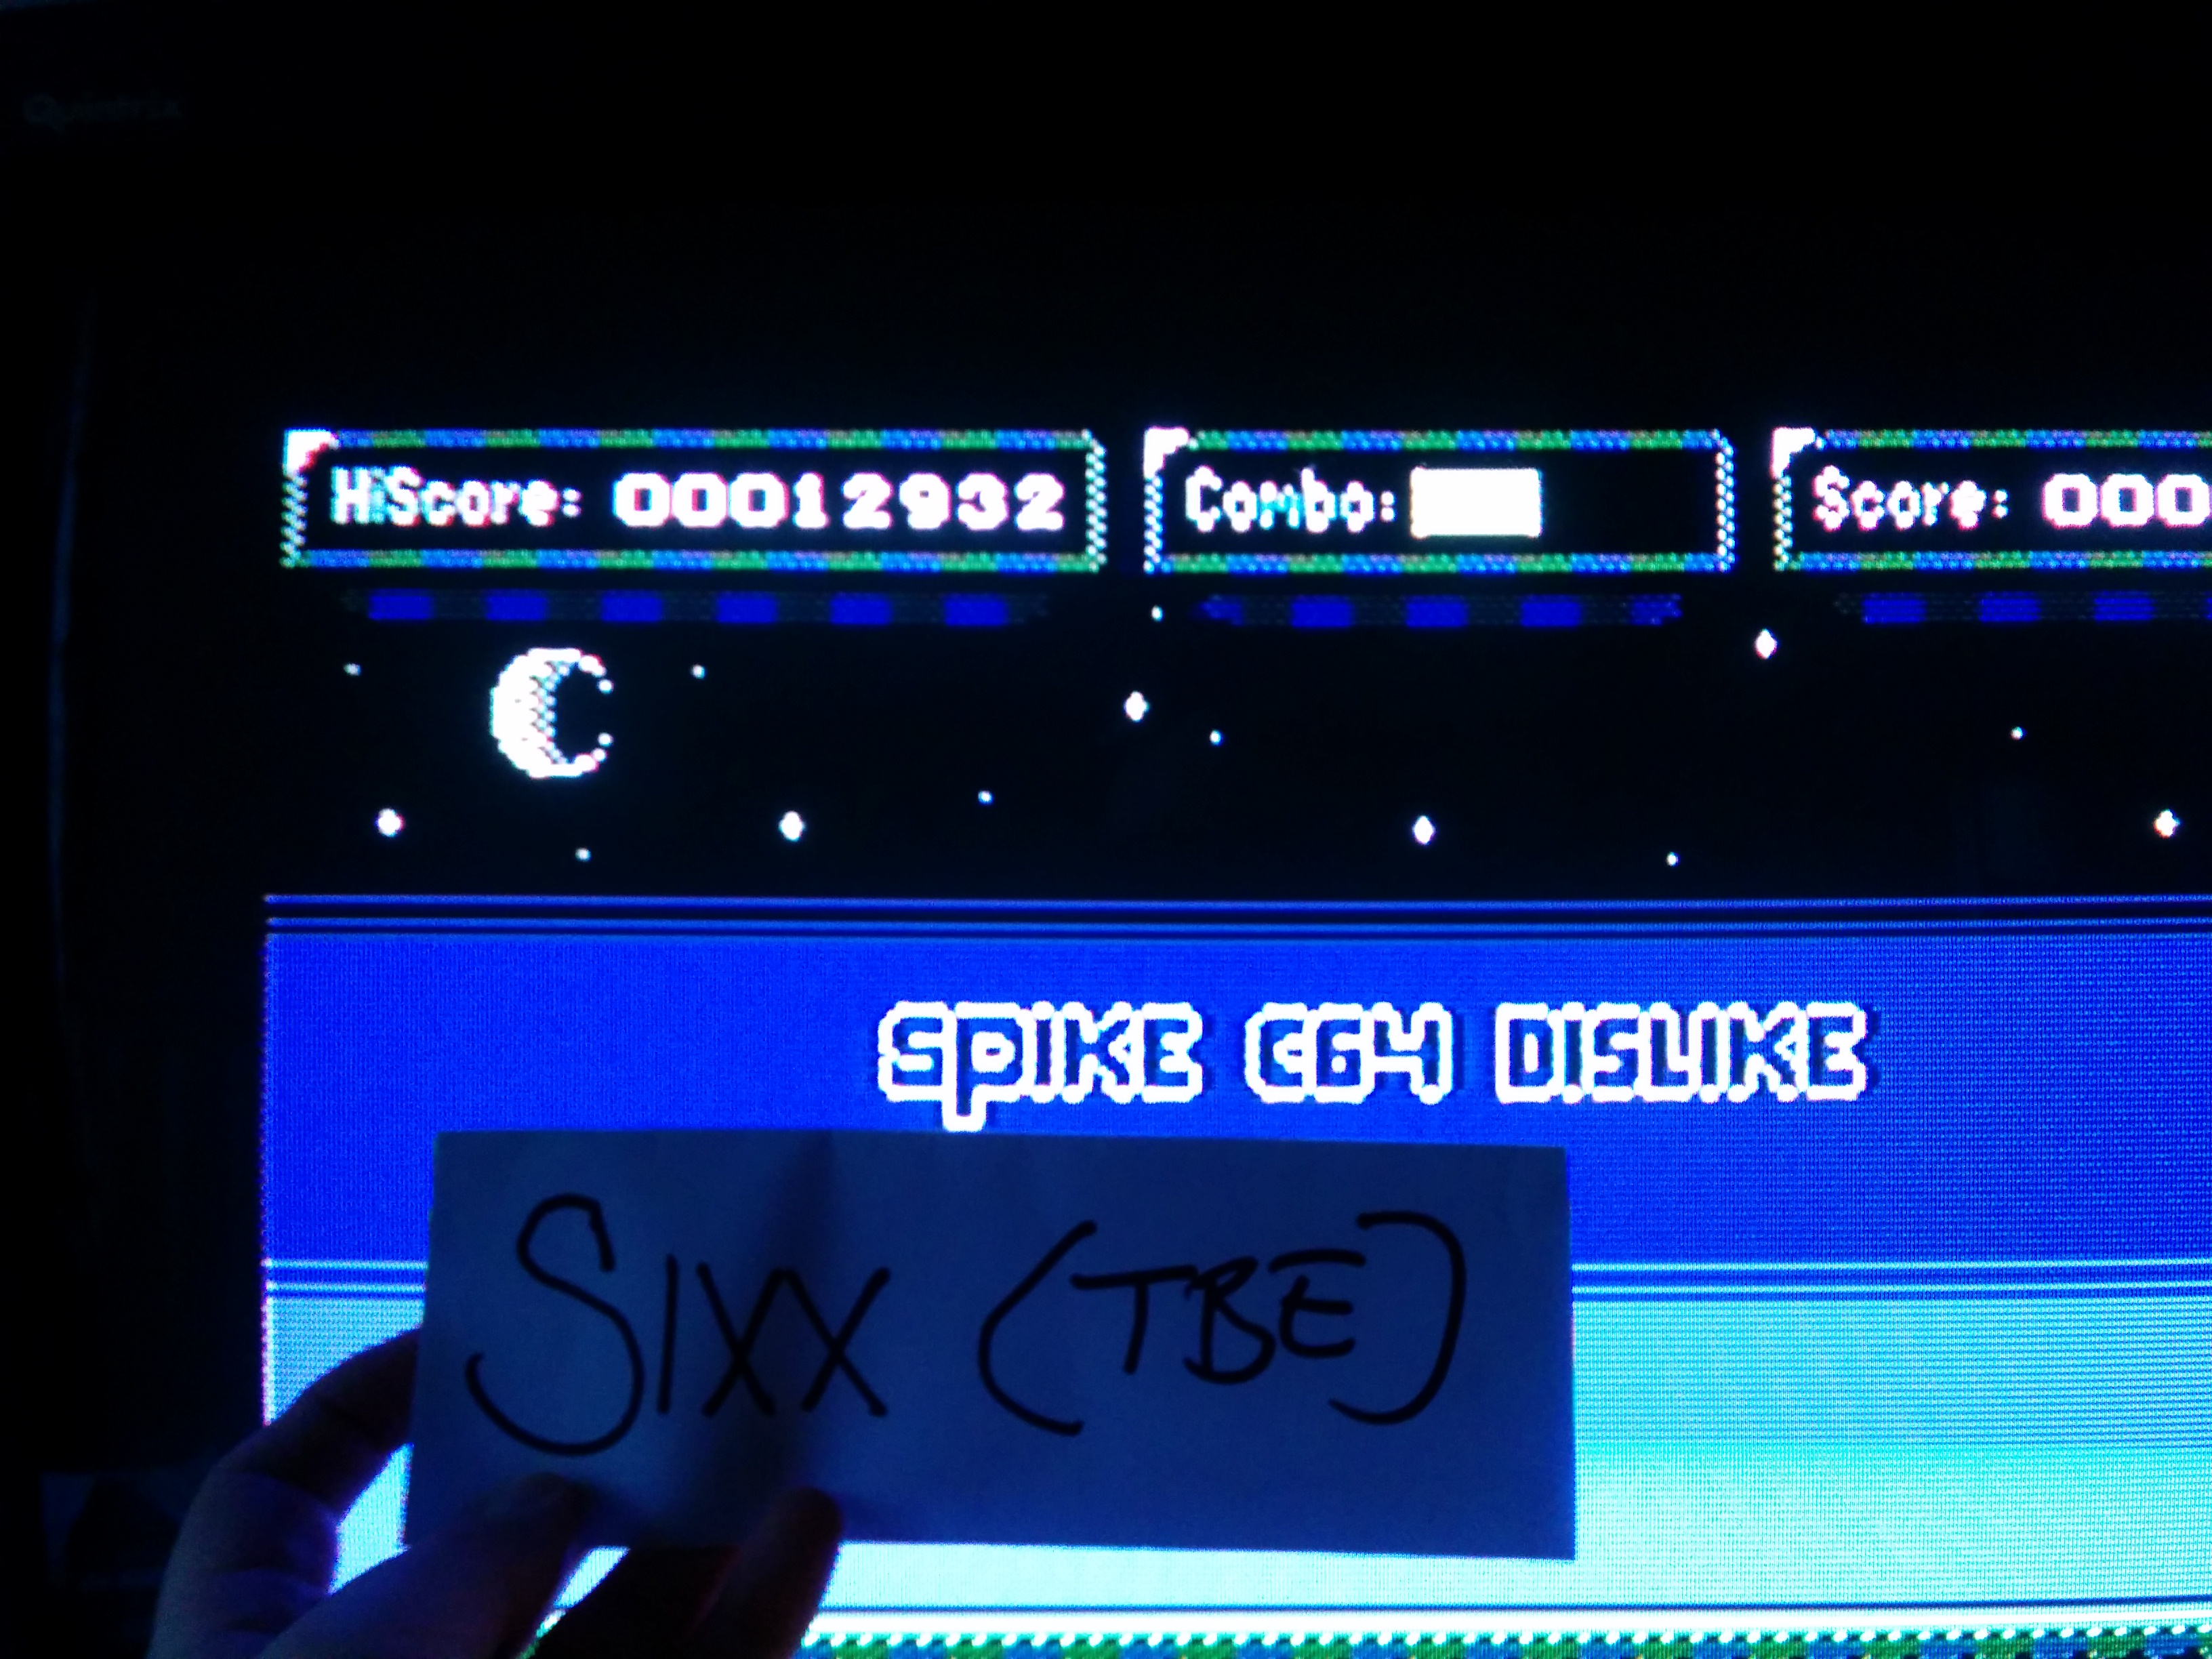 Spike C64 Dislike 12,932 points